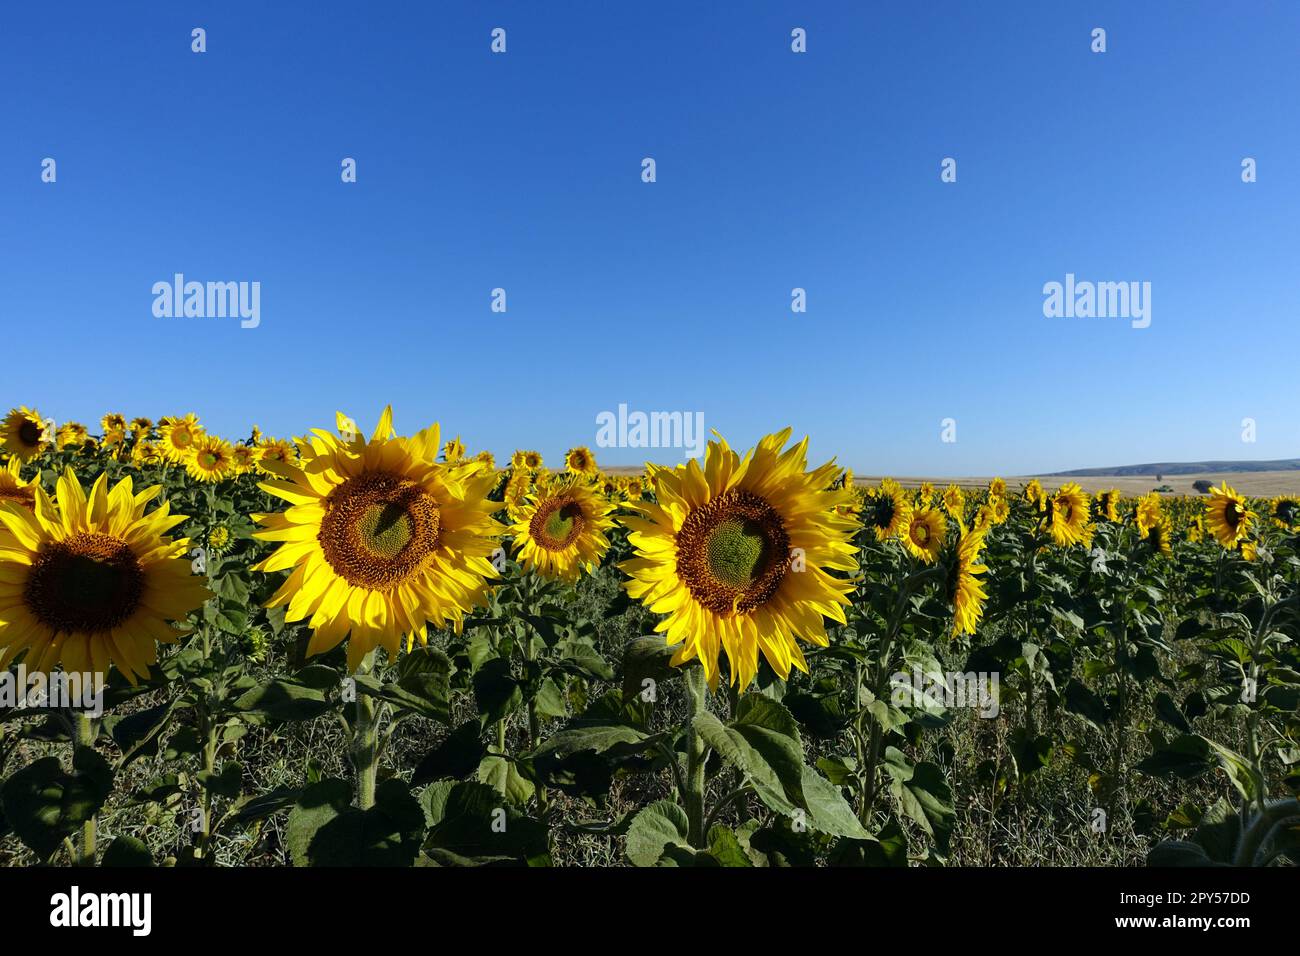 campos plantados con girasoles en clima continental, miles de girasoles de flores amarillas Foto de stock